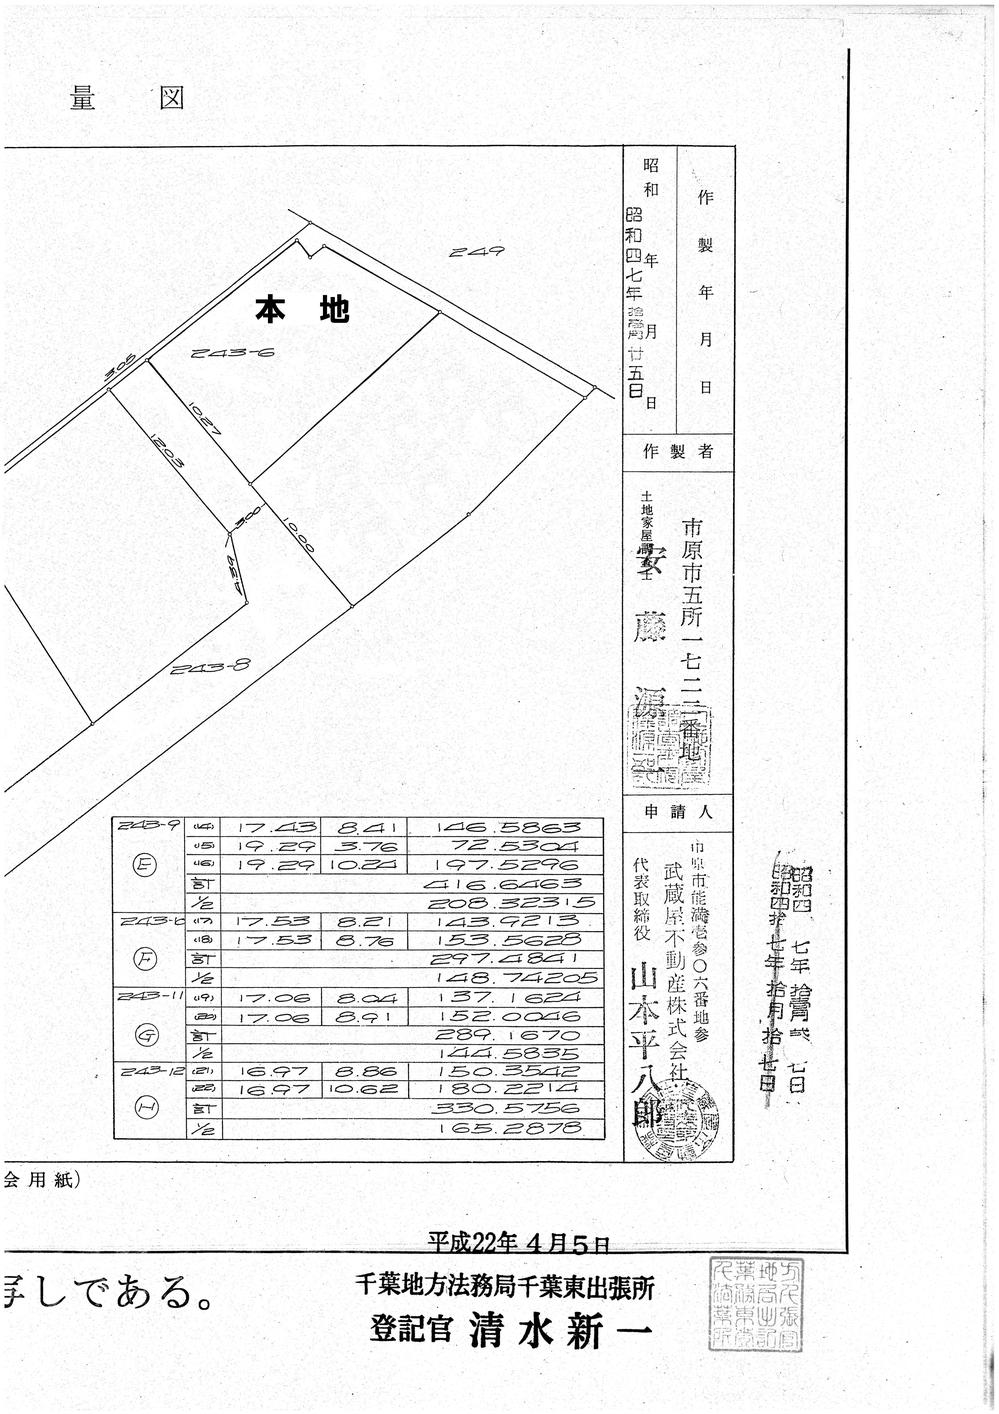 Compartment figure. Land price 2.9 million yen, Land area 139.62 sq m